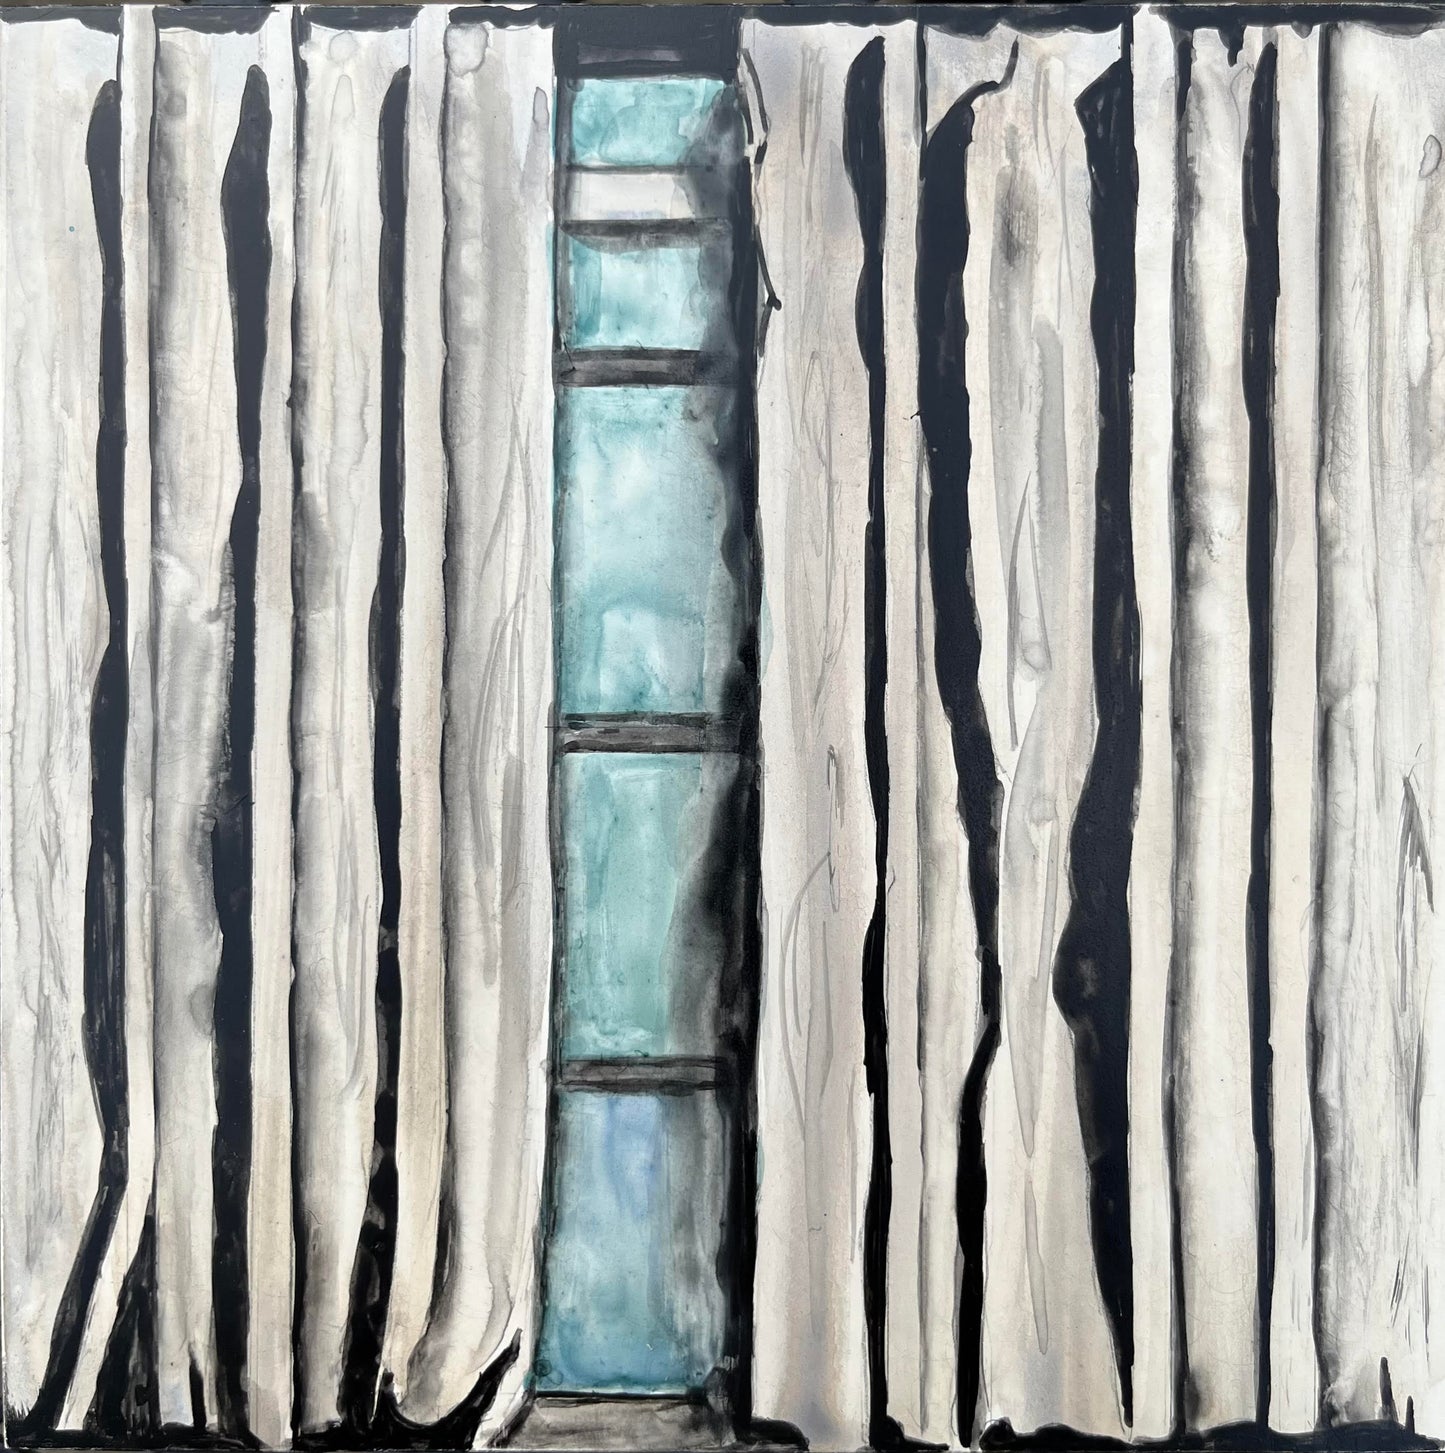 Abandoned Shadows 4 - 6" x 6" x 1.5" - Original Watercolor on Clayboard Cradled Panel